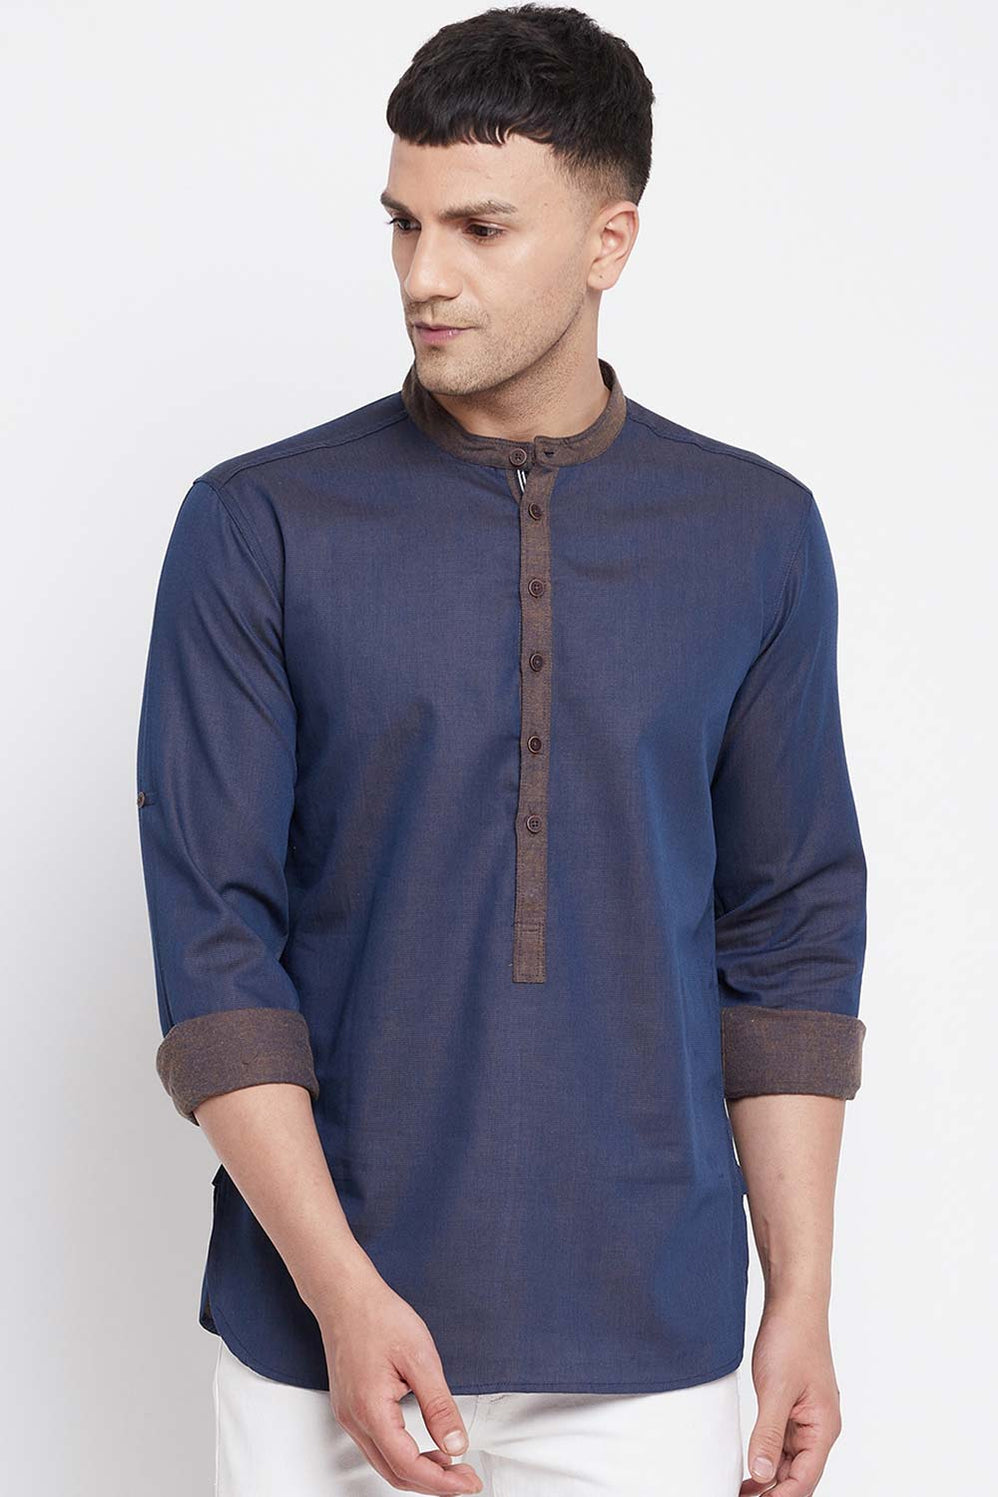 Shop Indian Wedding Menswear and Designer Suits | Karmaplace ...